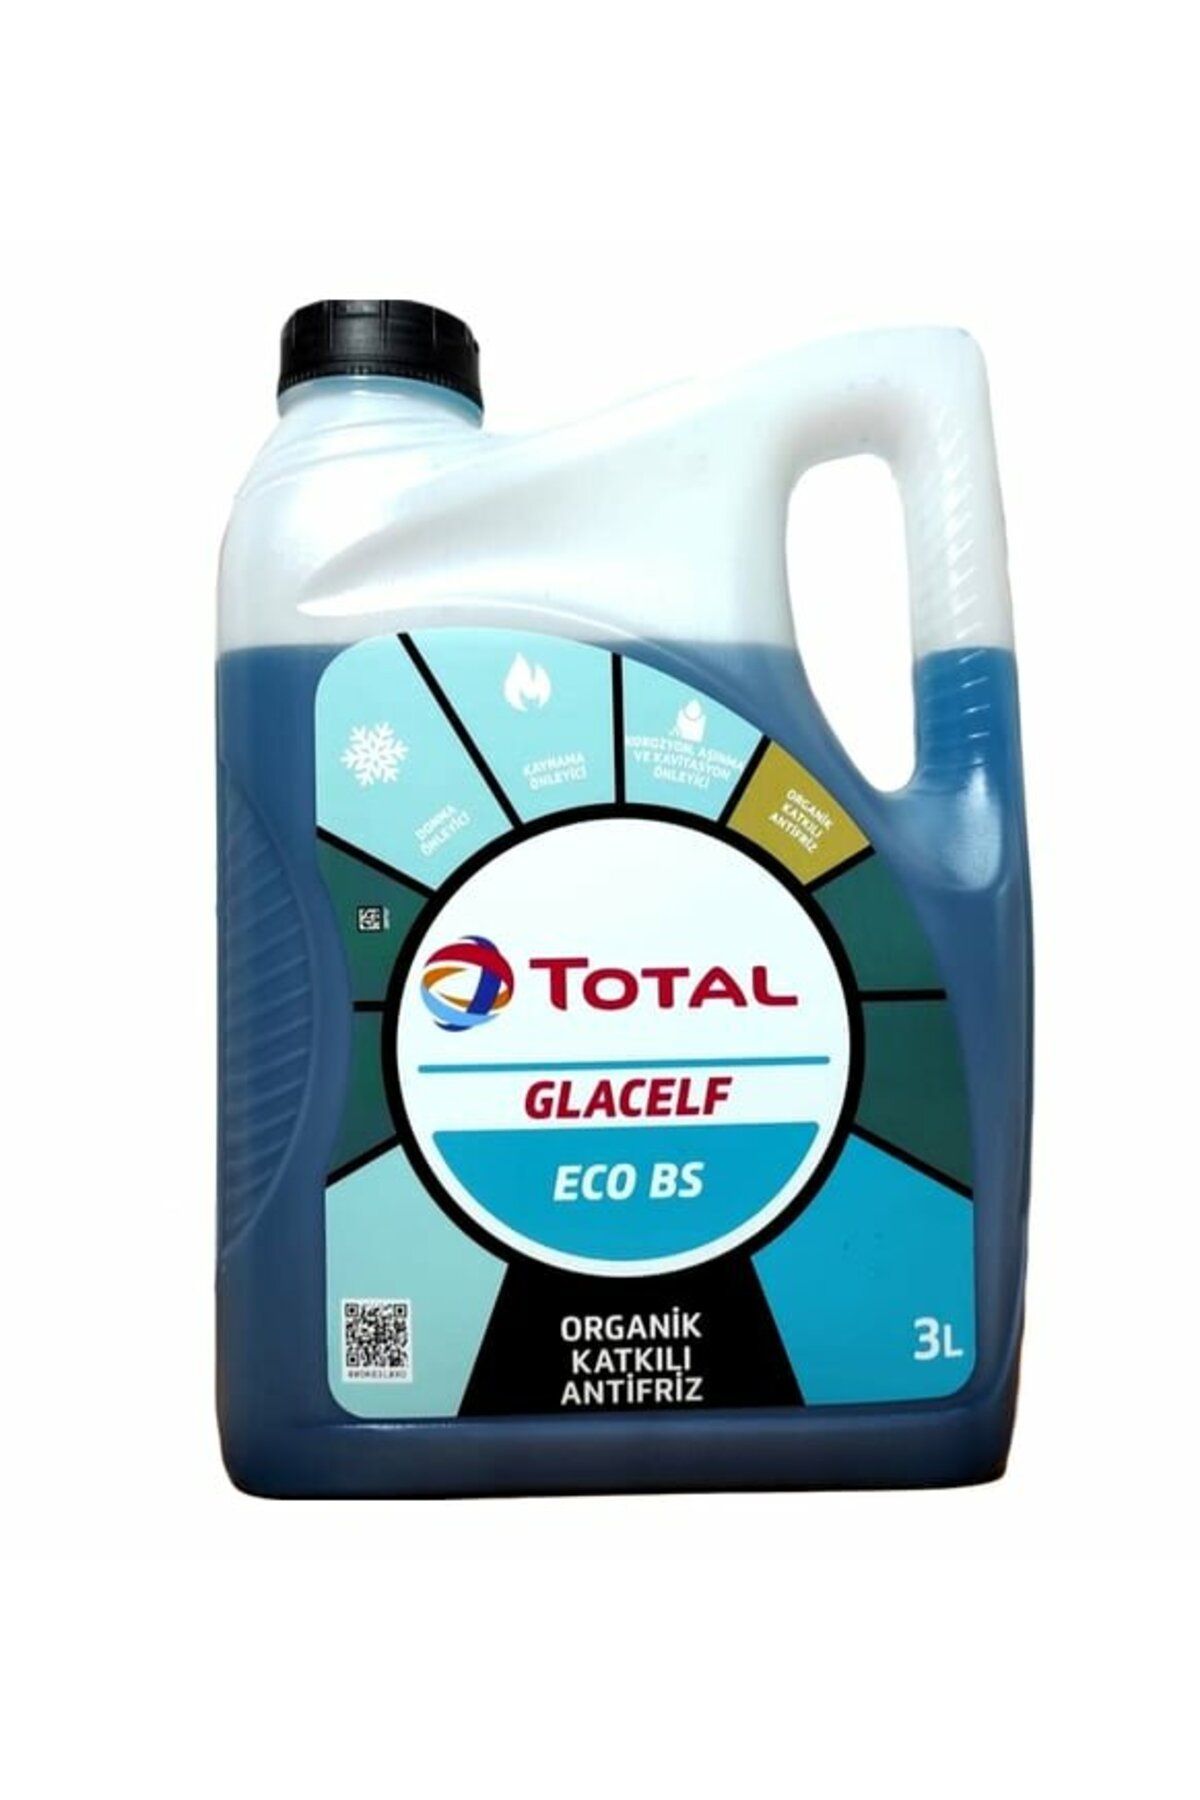 Total Glacelf Eco Bs Glacelf Auto Eco Bs Mavi Antifiriz 3lt